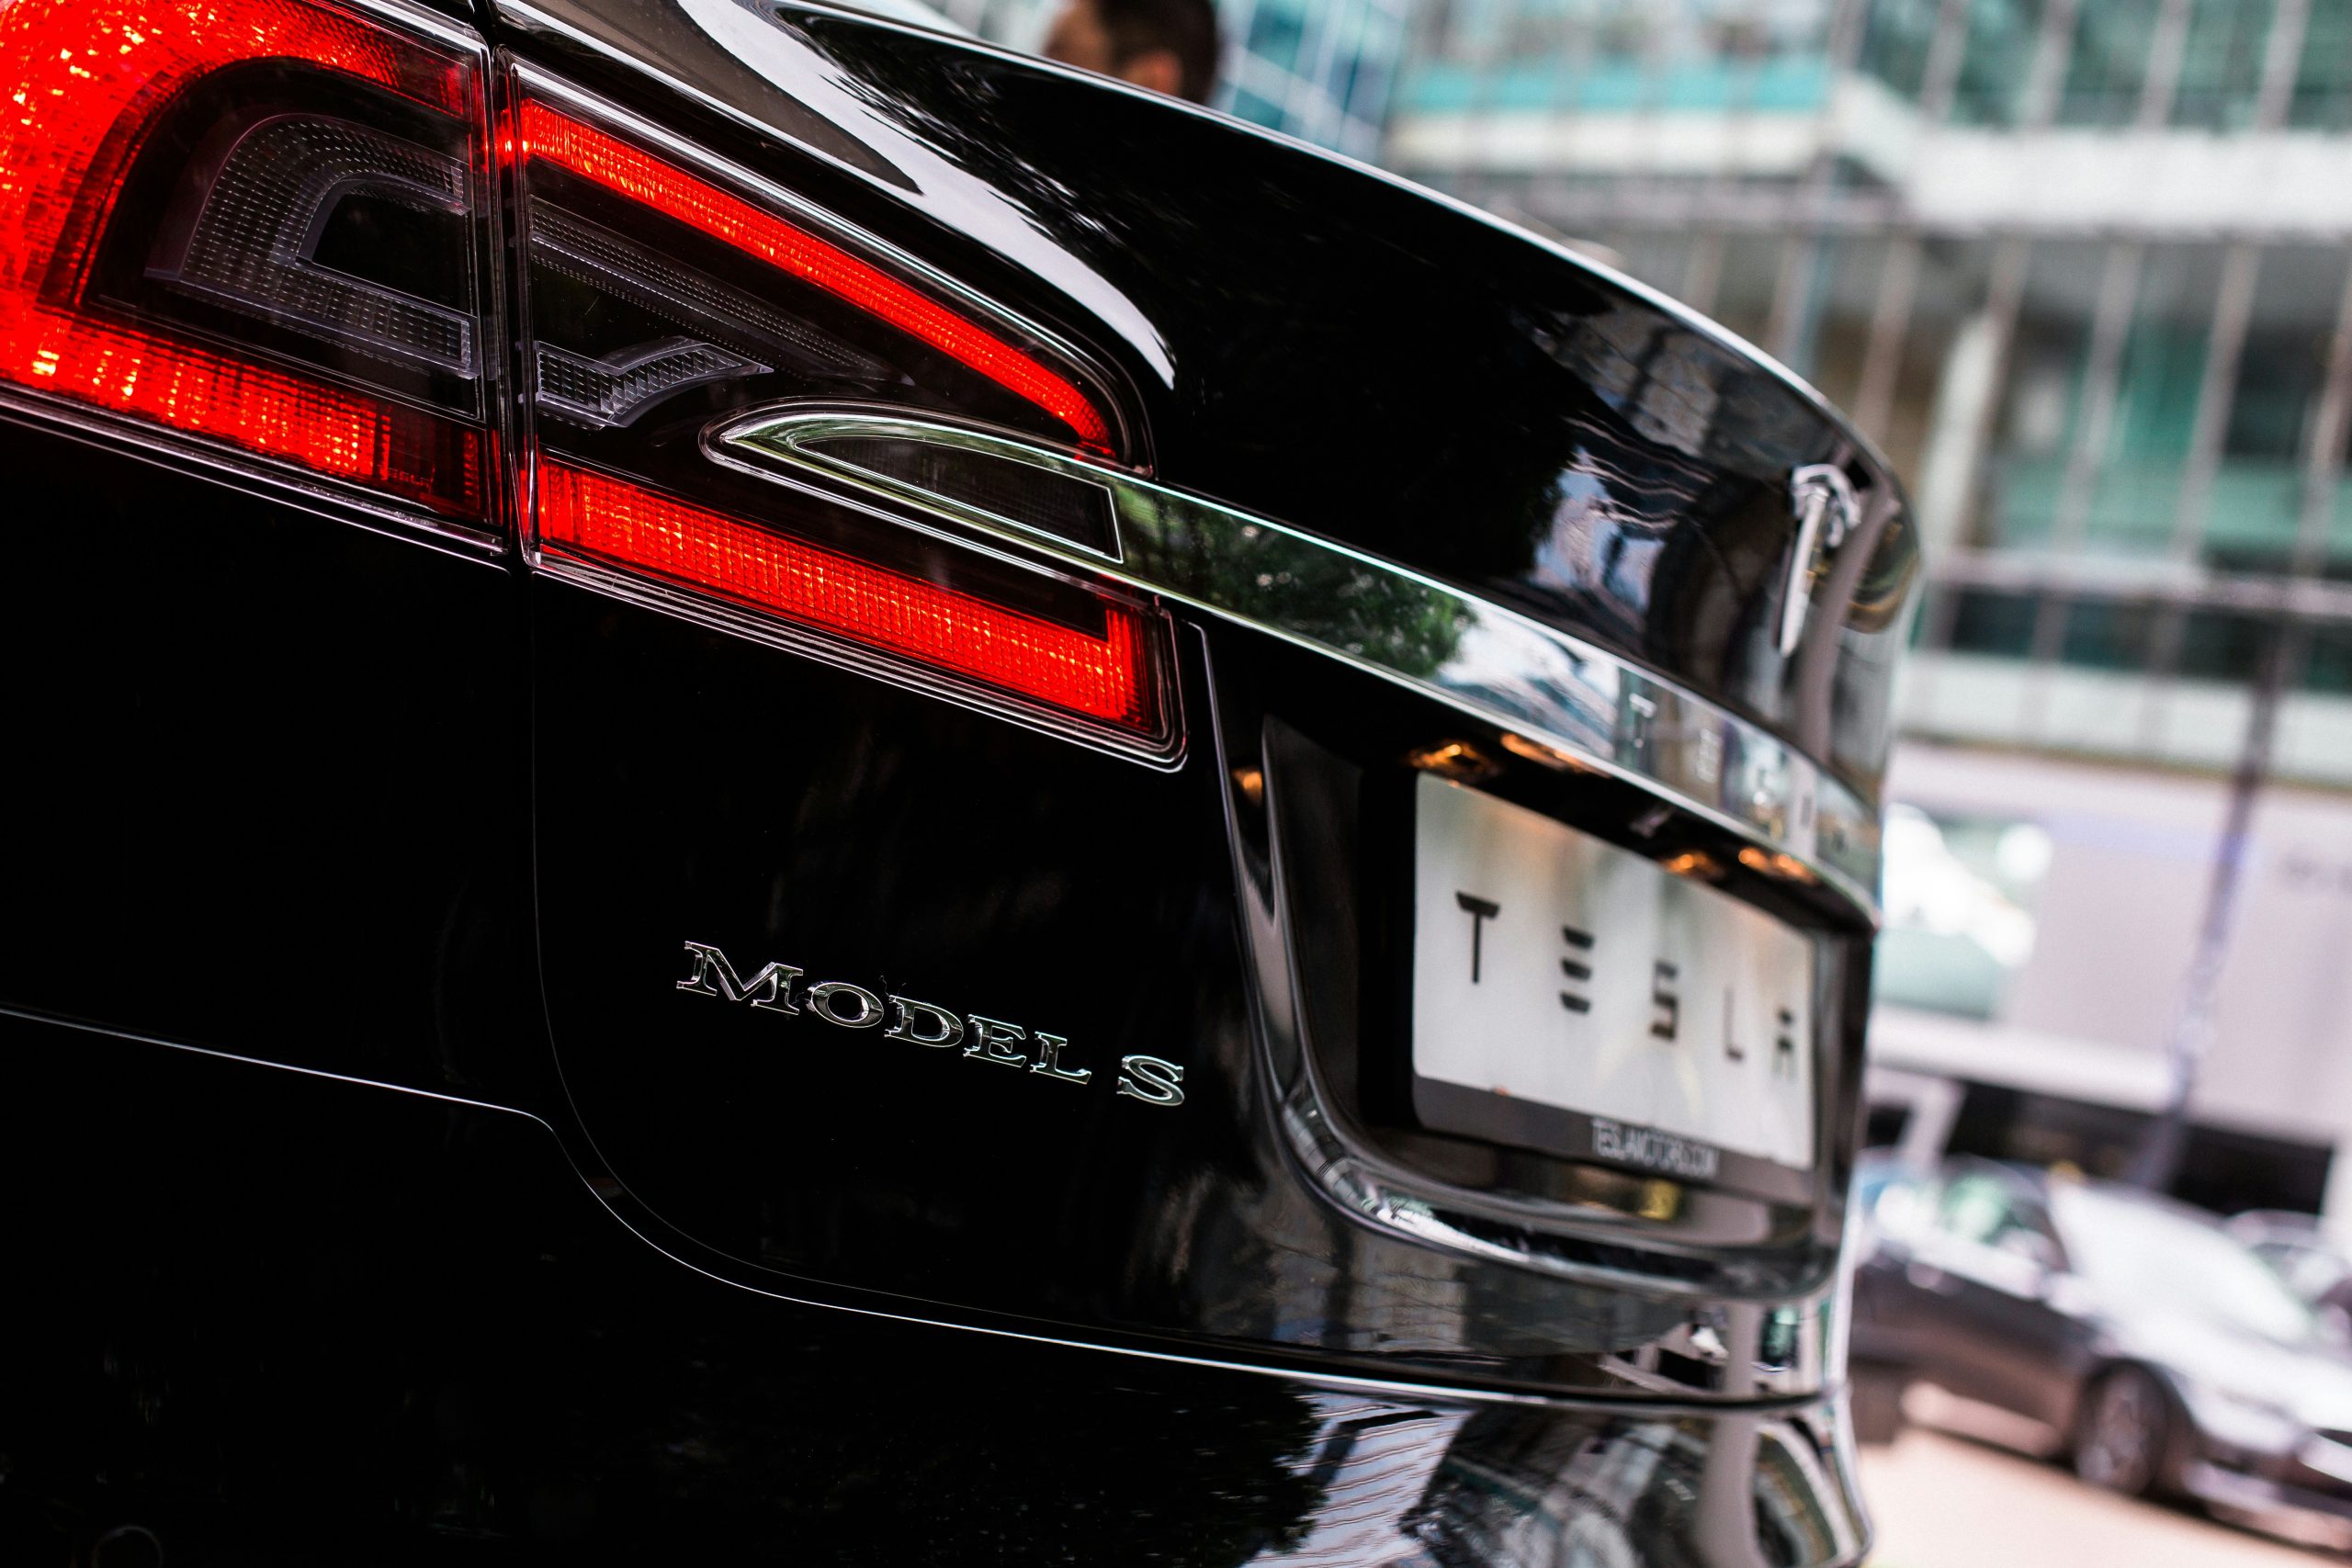 Rear View of a Black Tesla Model S